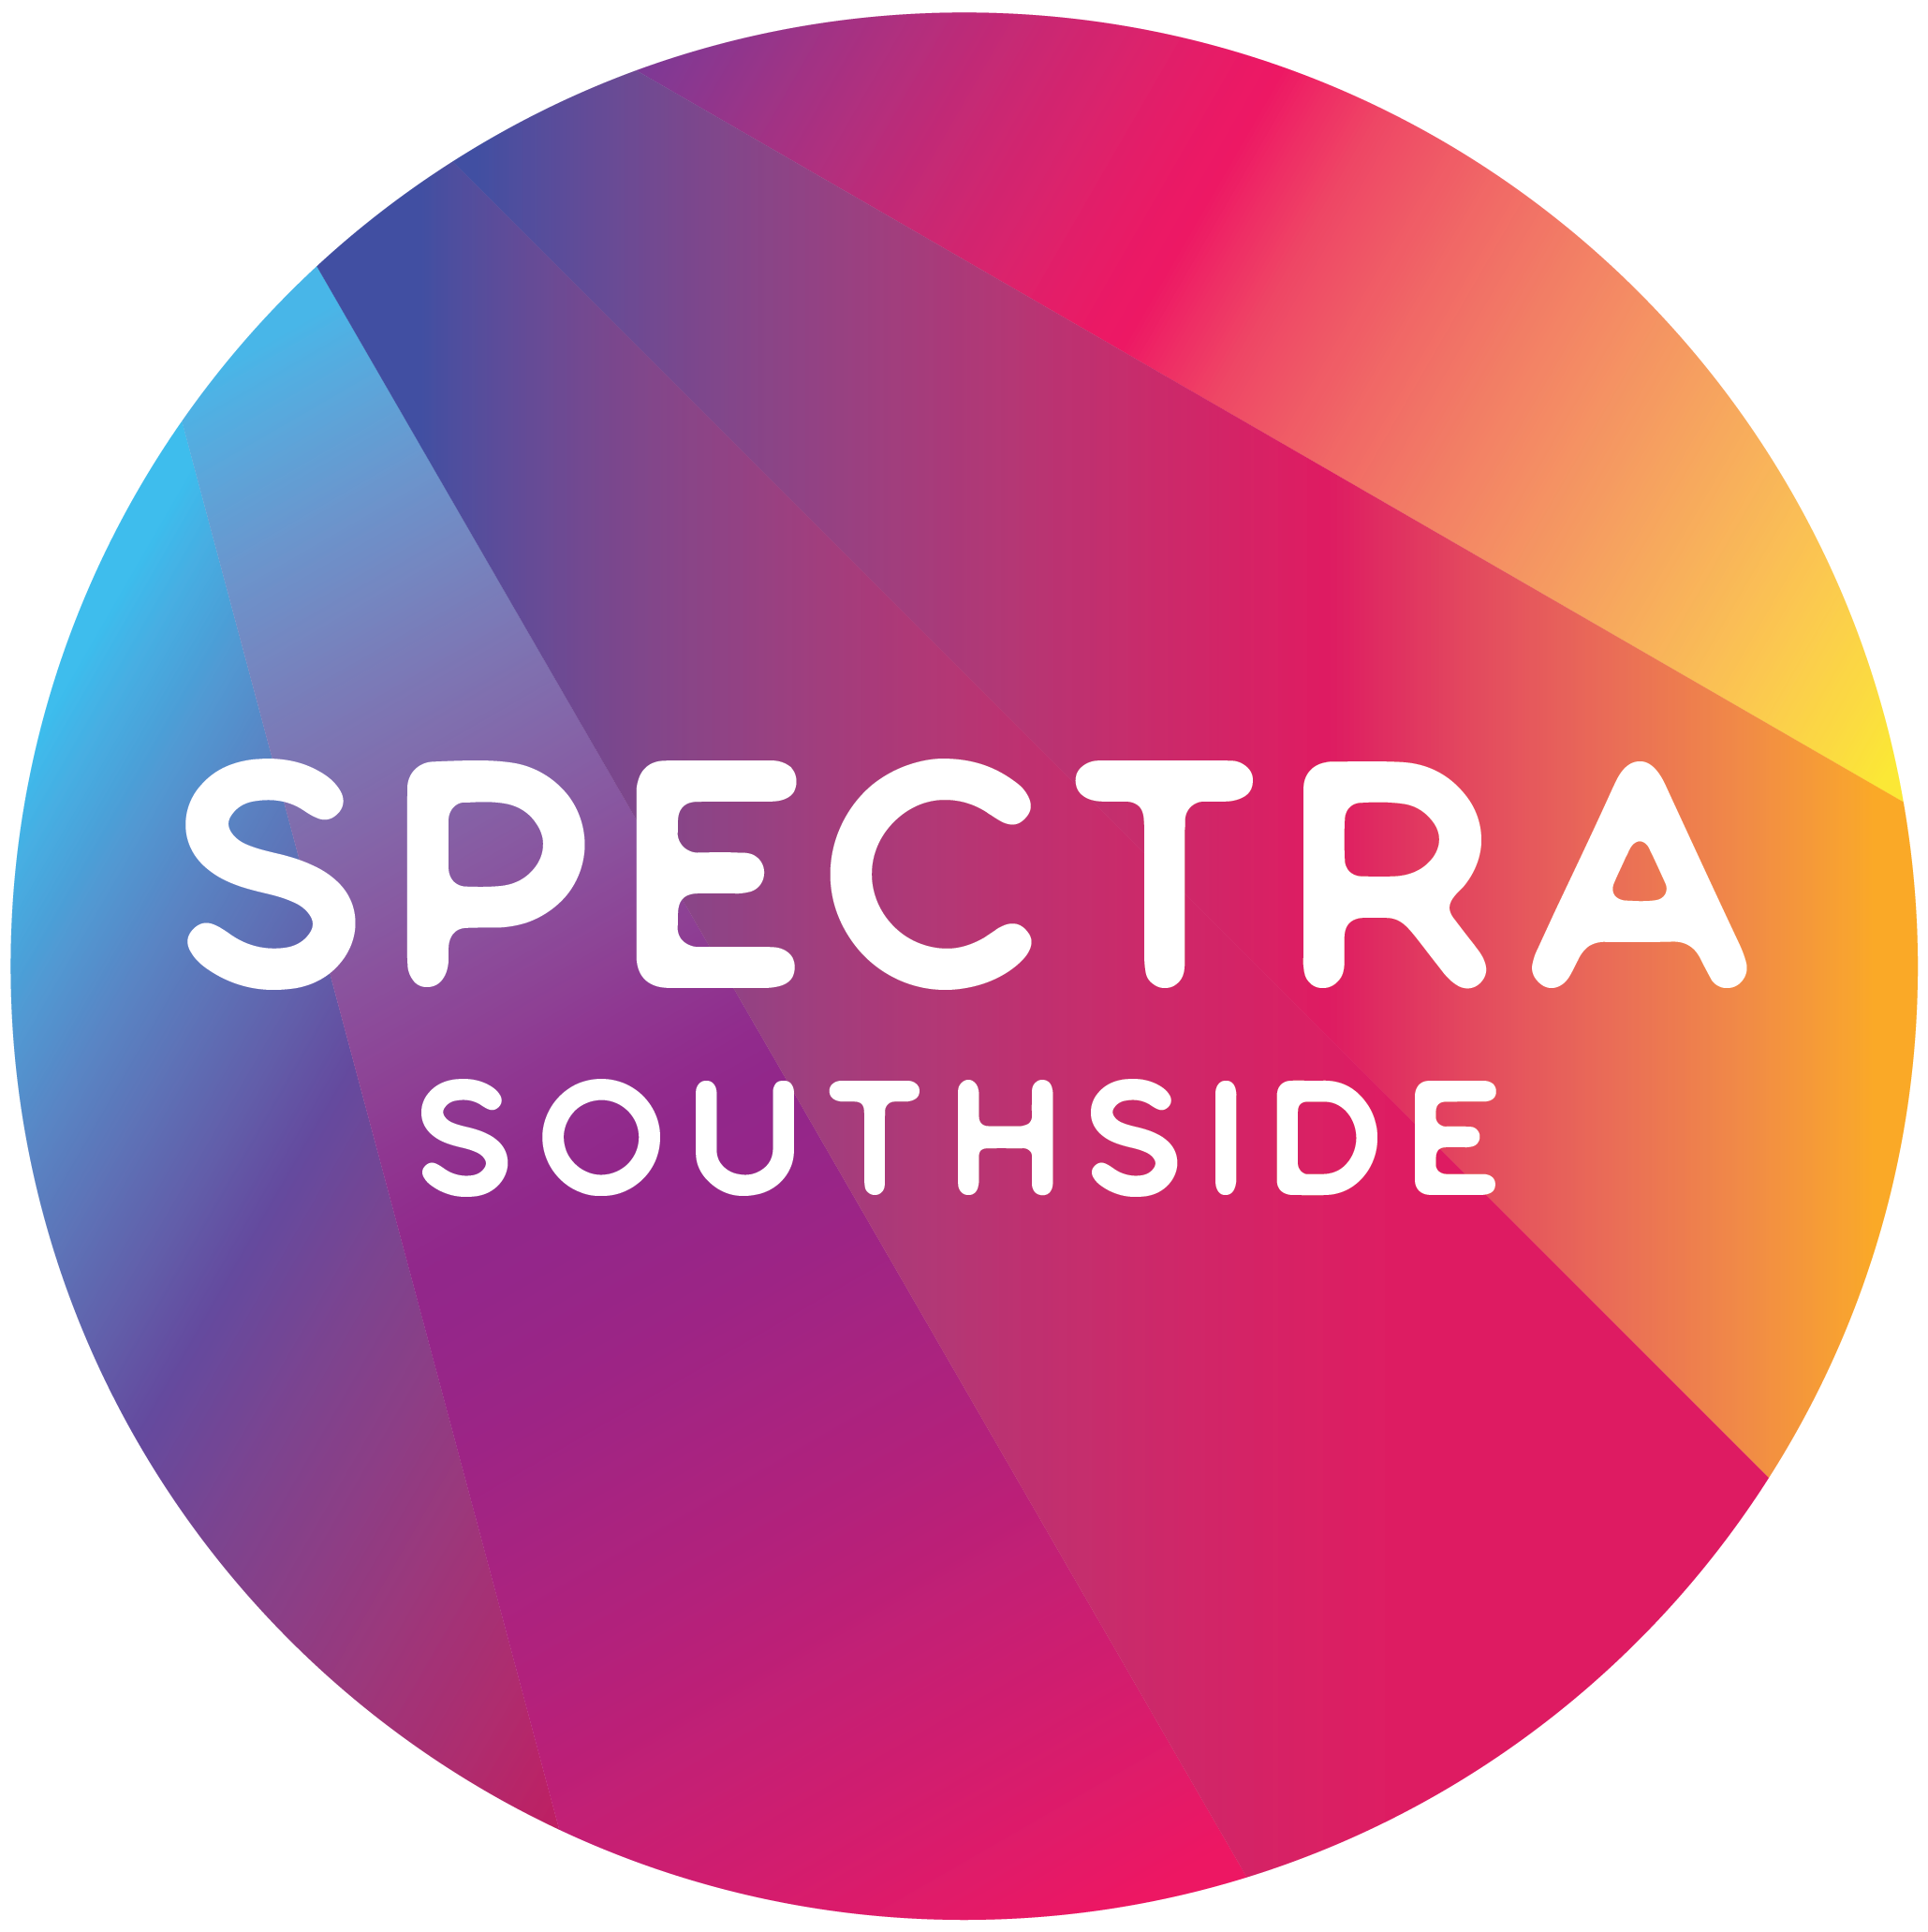 Spectra Southside